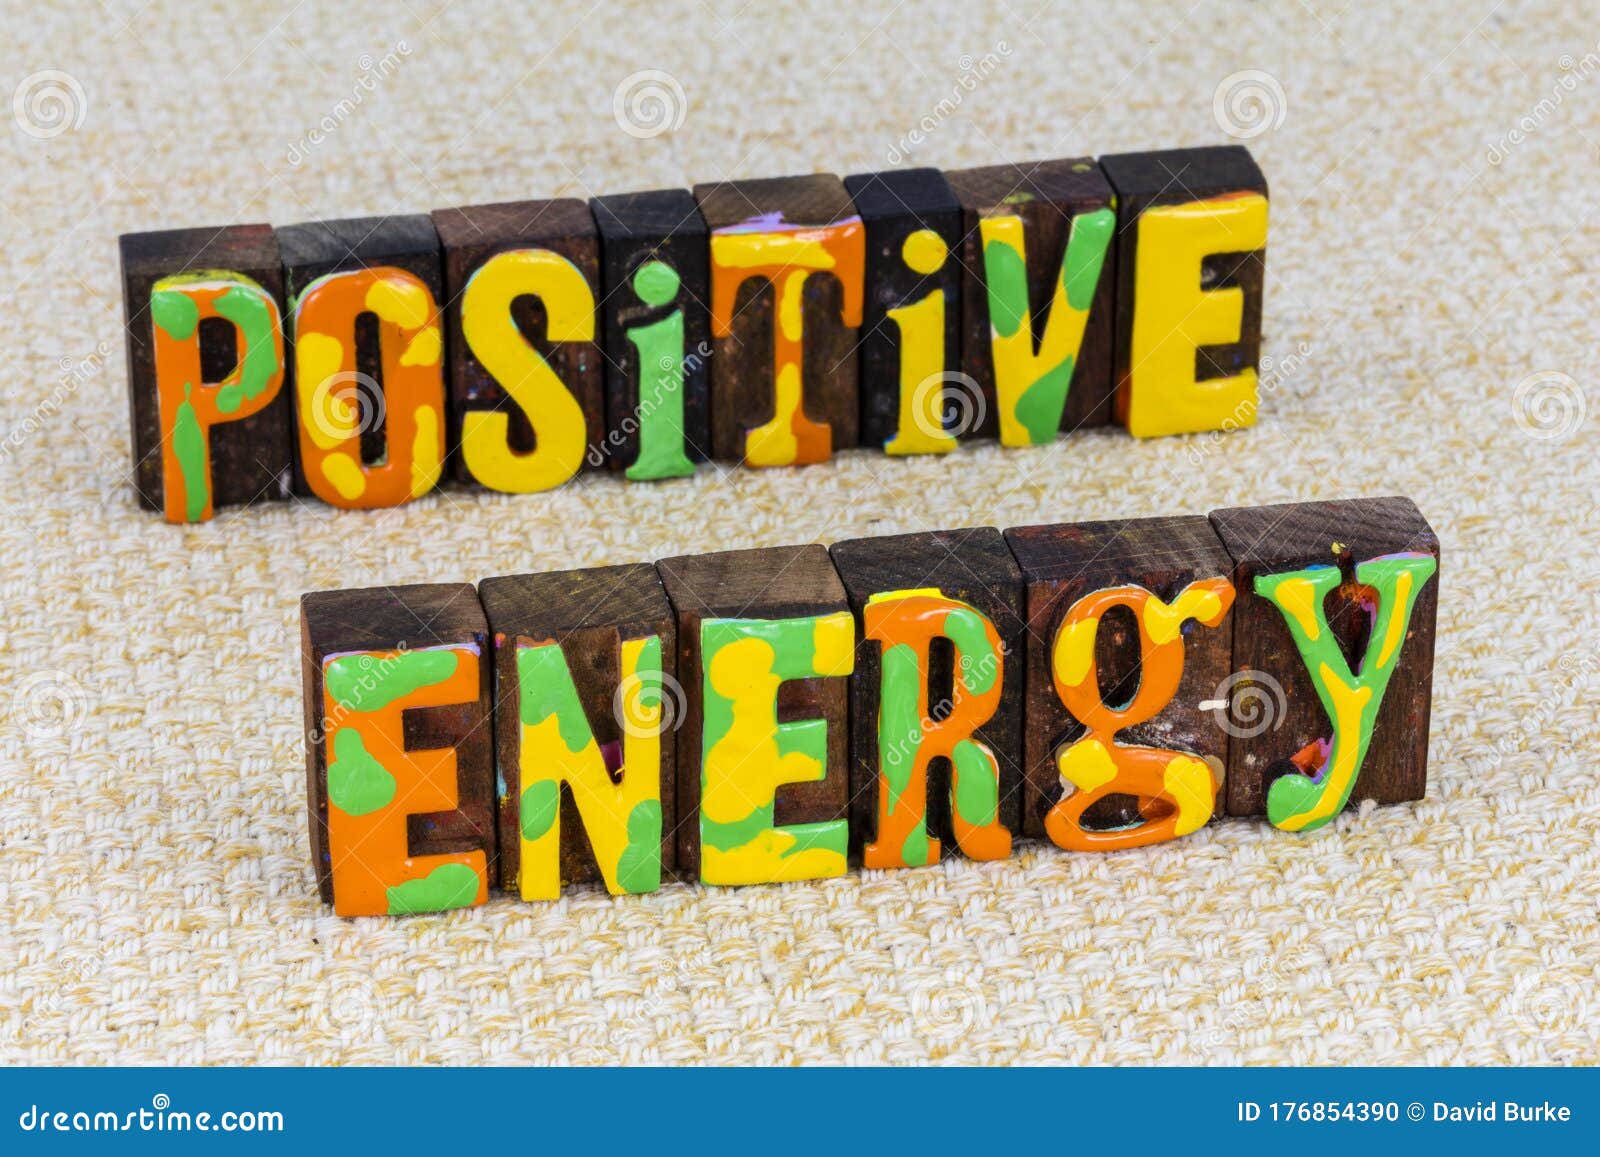 positive energy outlook attitude ambition